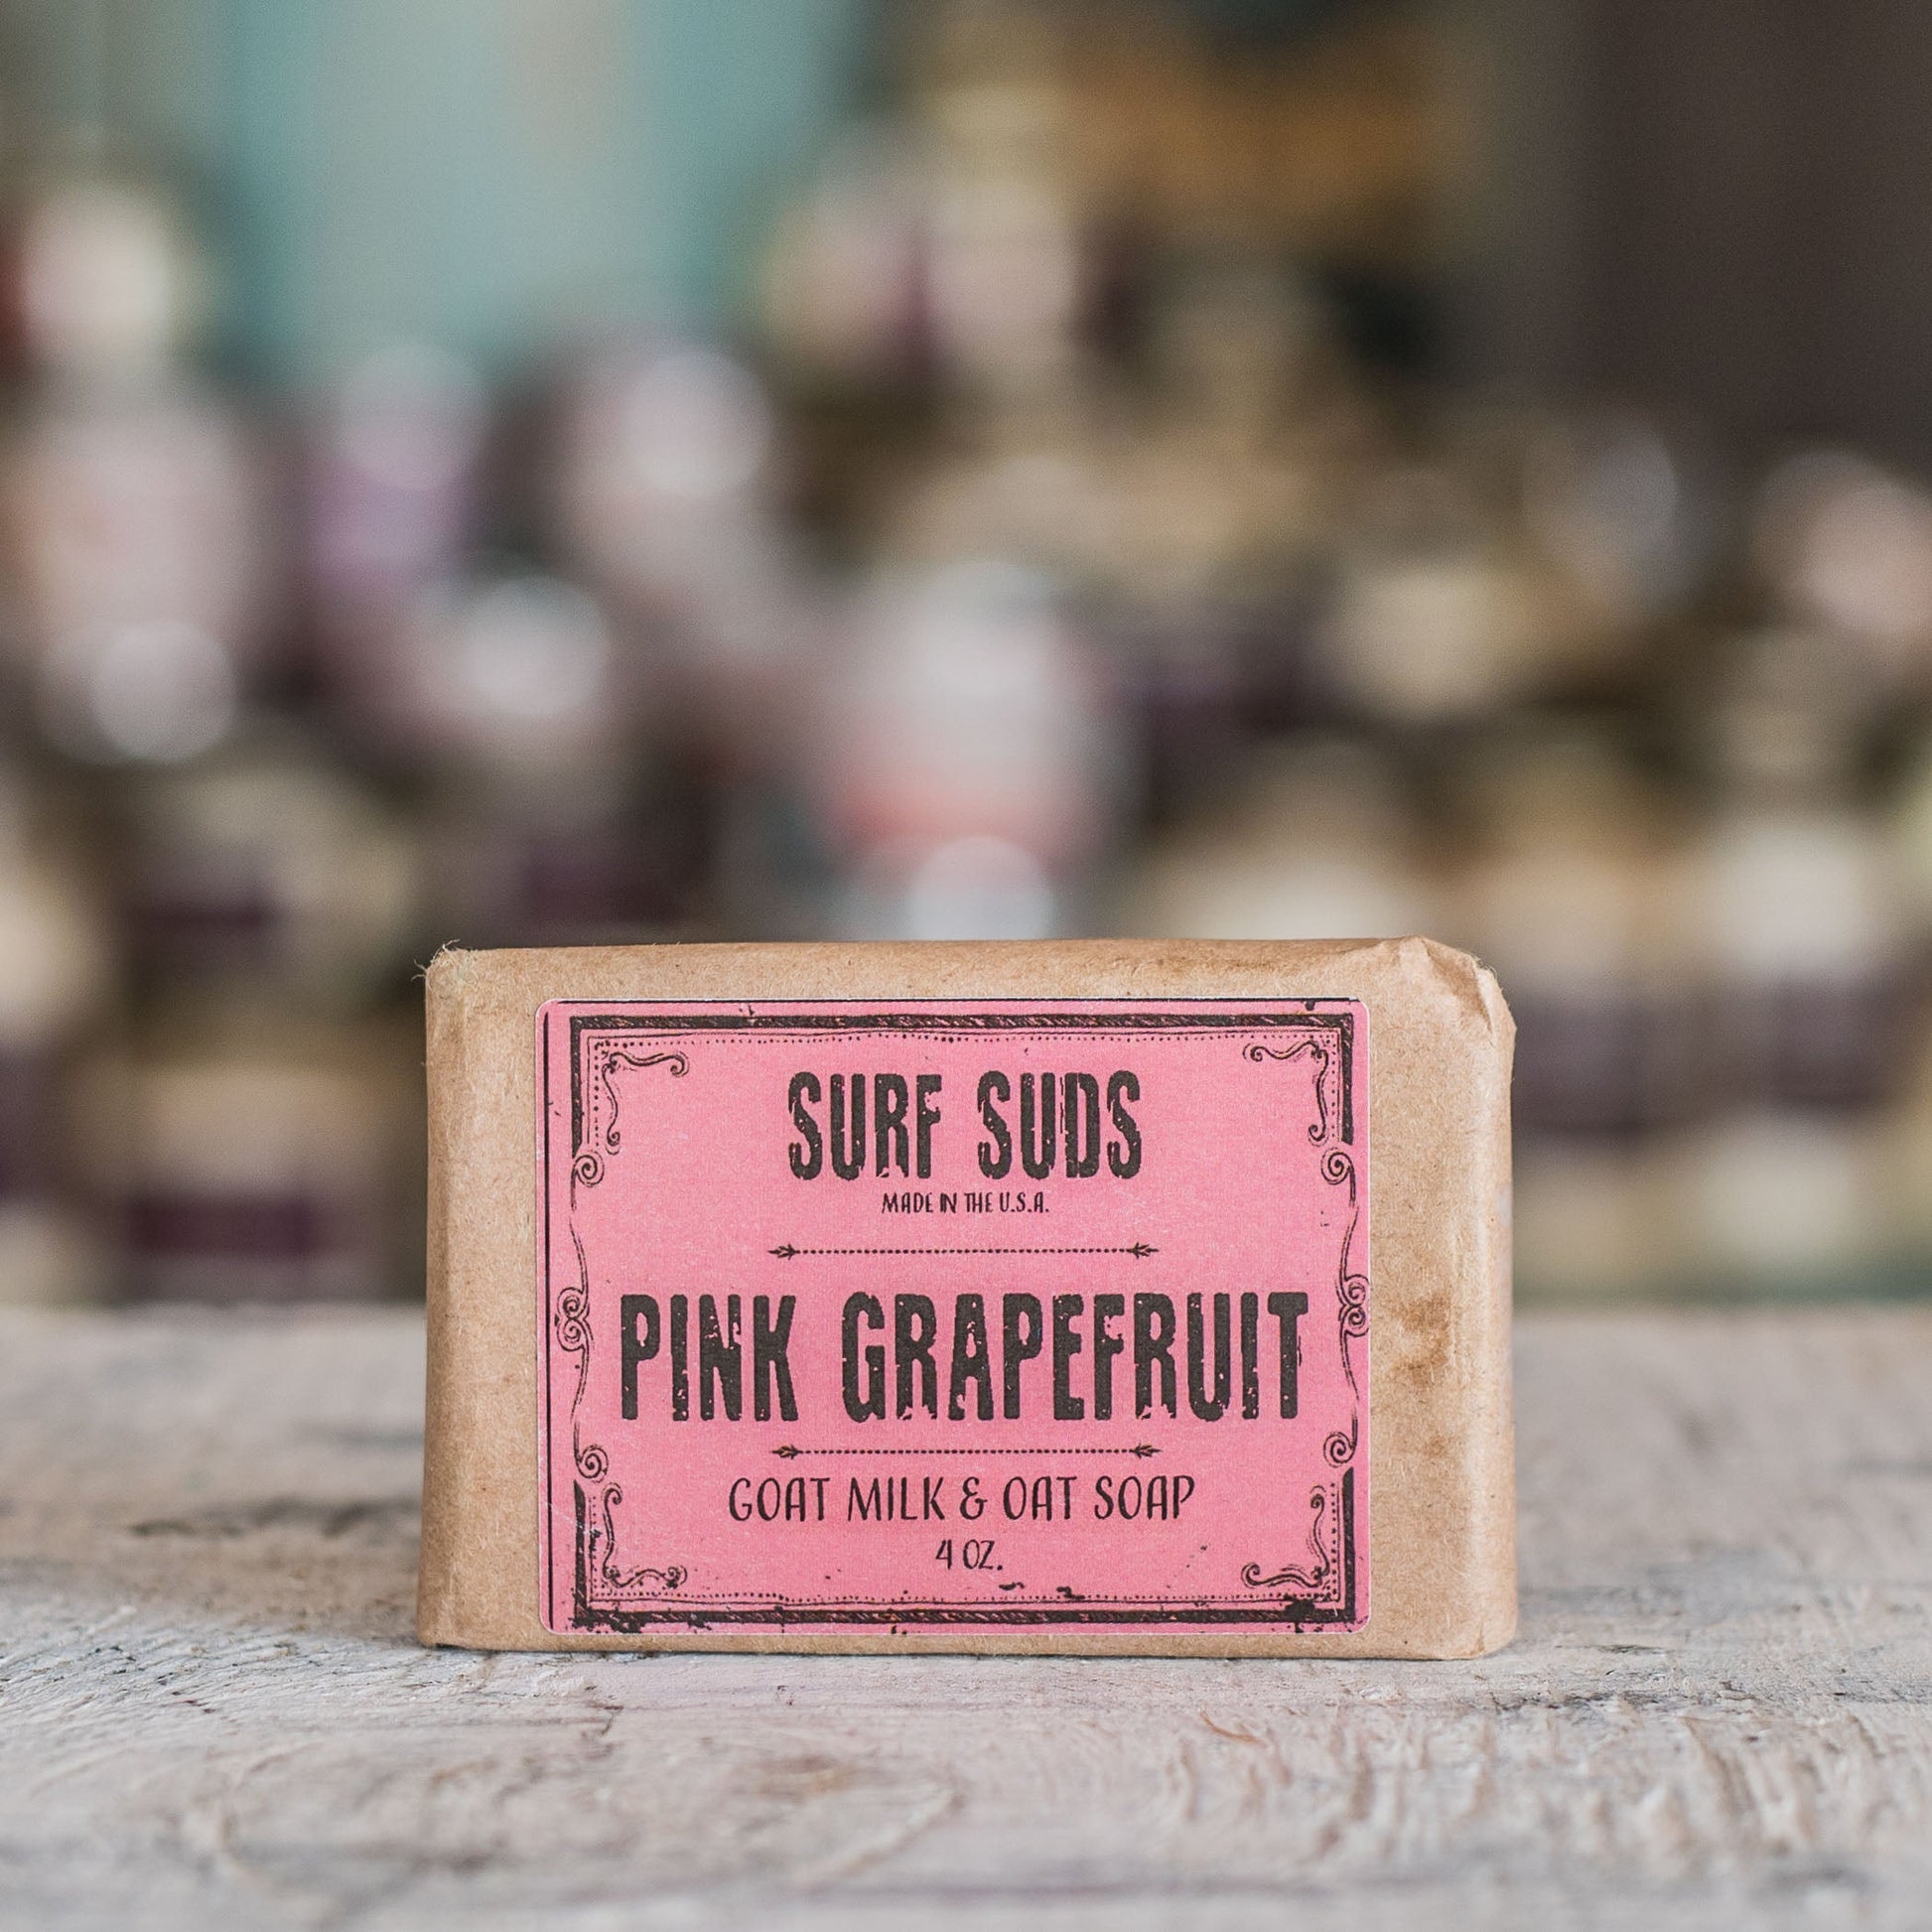 Pink grapefruit goats milk soap